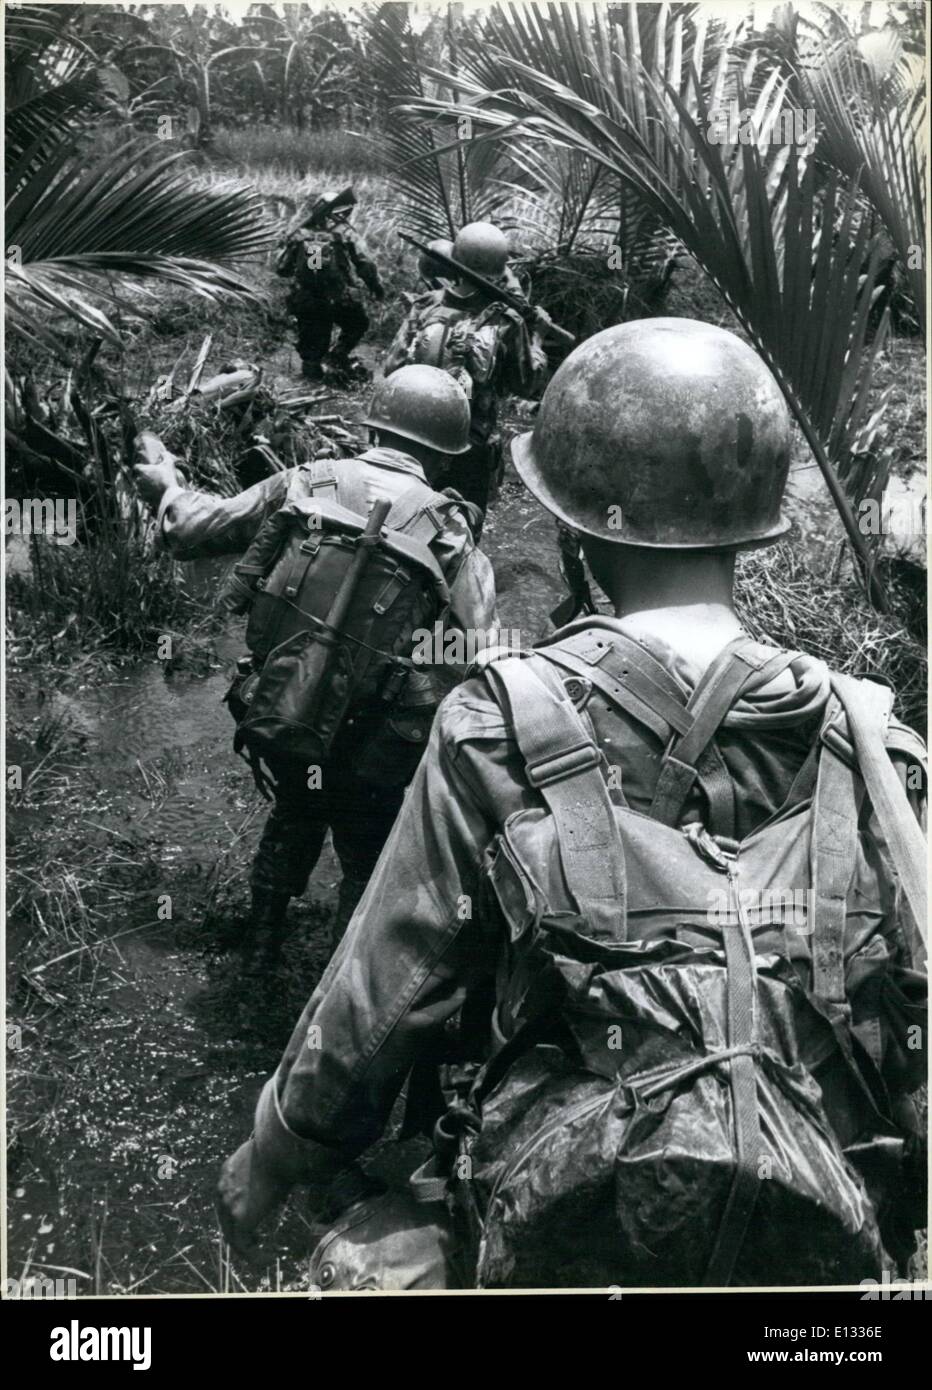 Febbraio 26, 2012 - Vietnam guerra di guerriglia Foto Stock